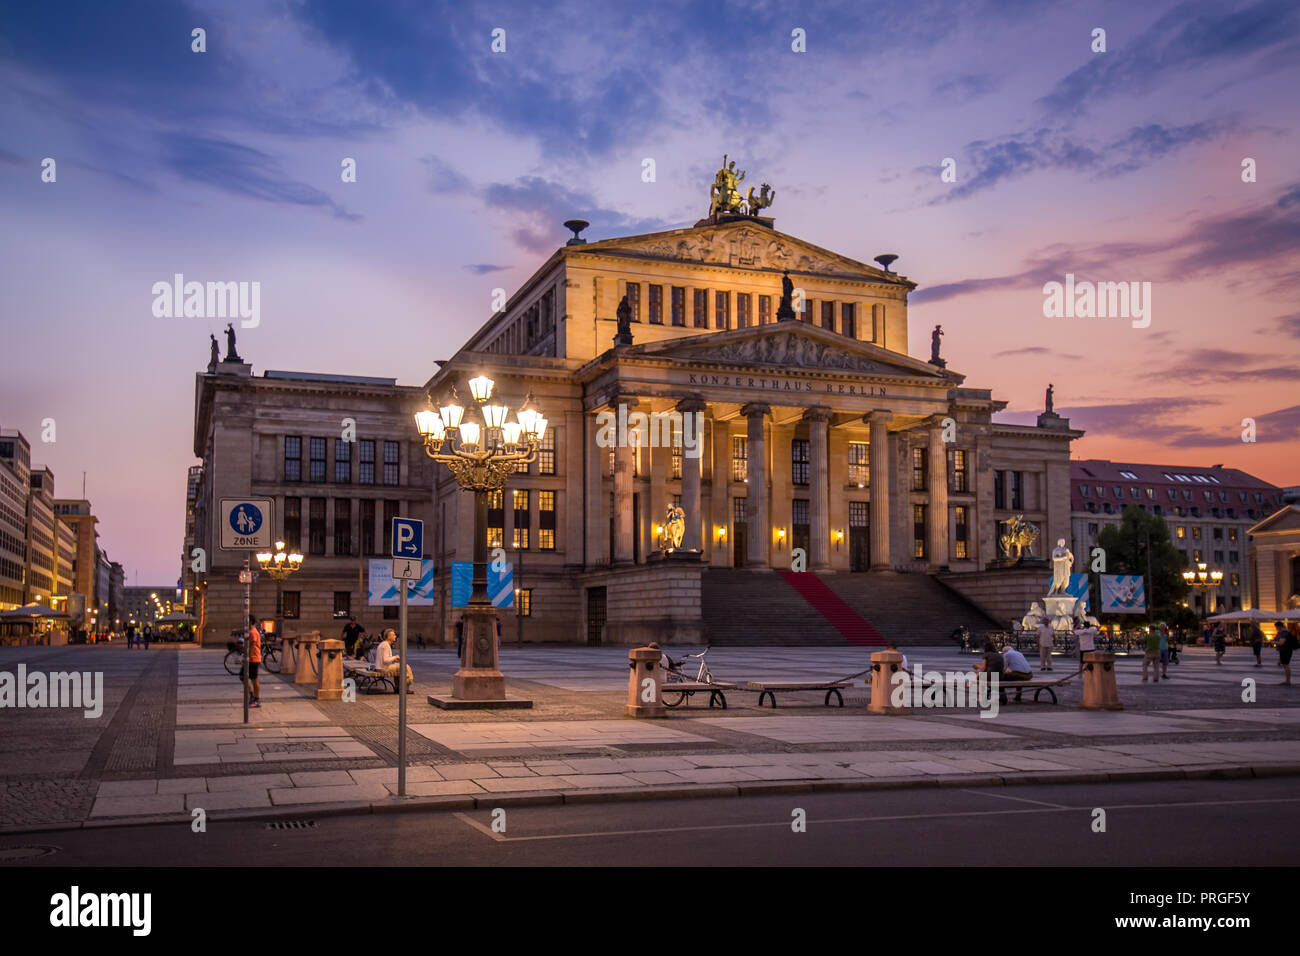 Konzerthaus Berlin, Deutschland Blaue Stunde Sonnenuntergang Foto de stock